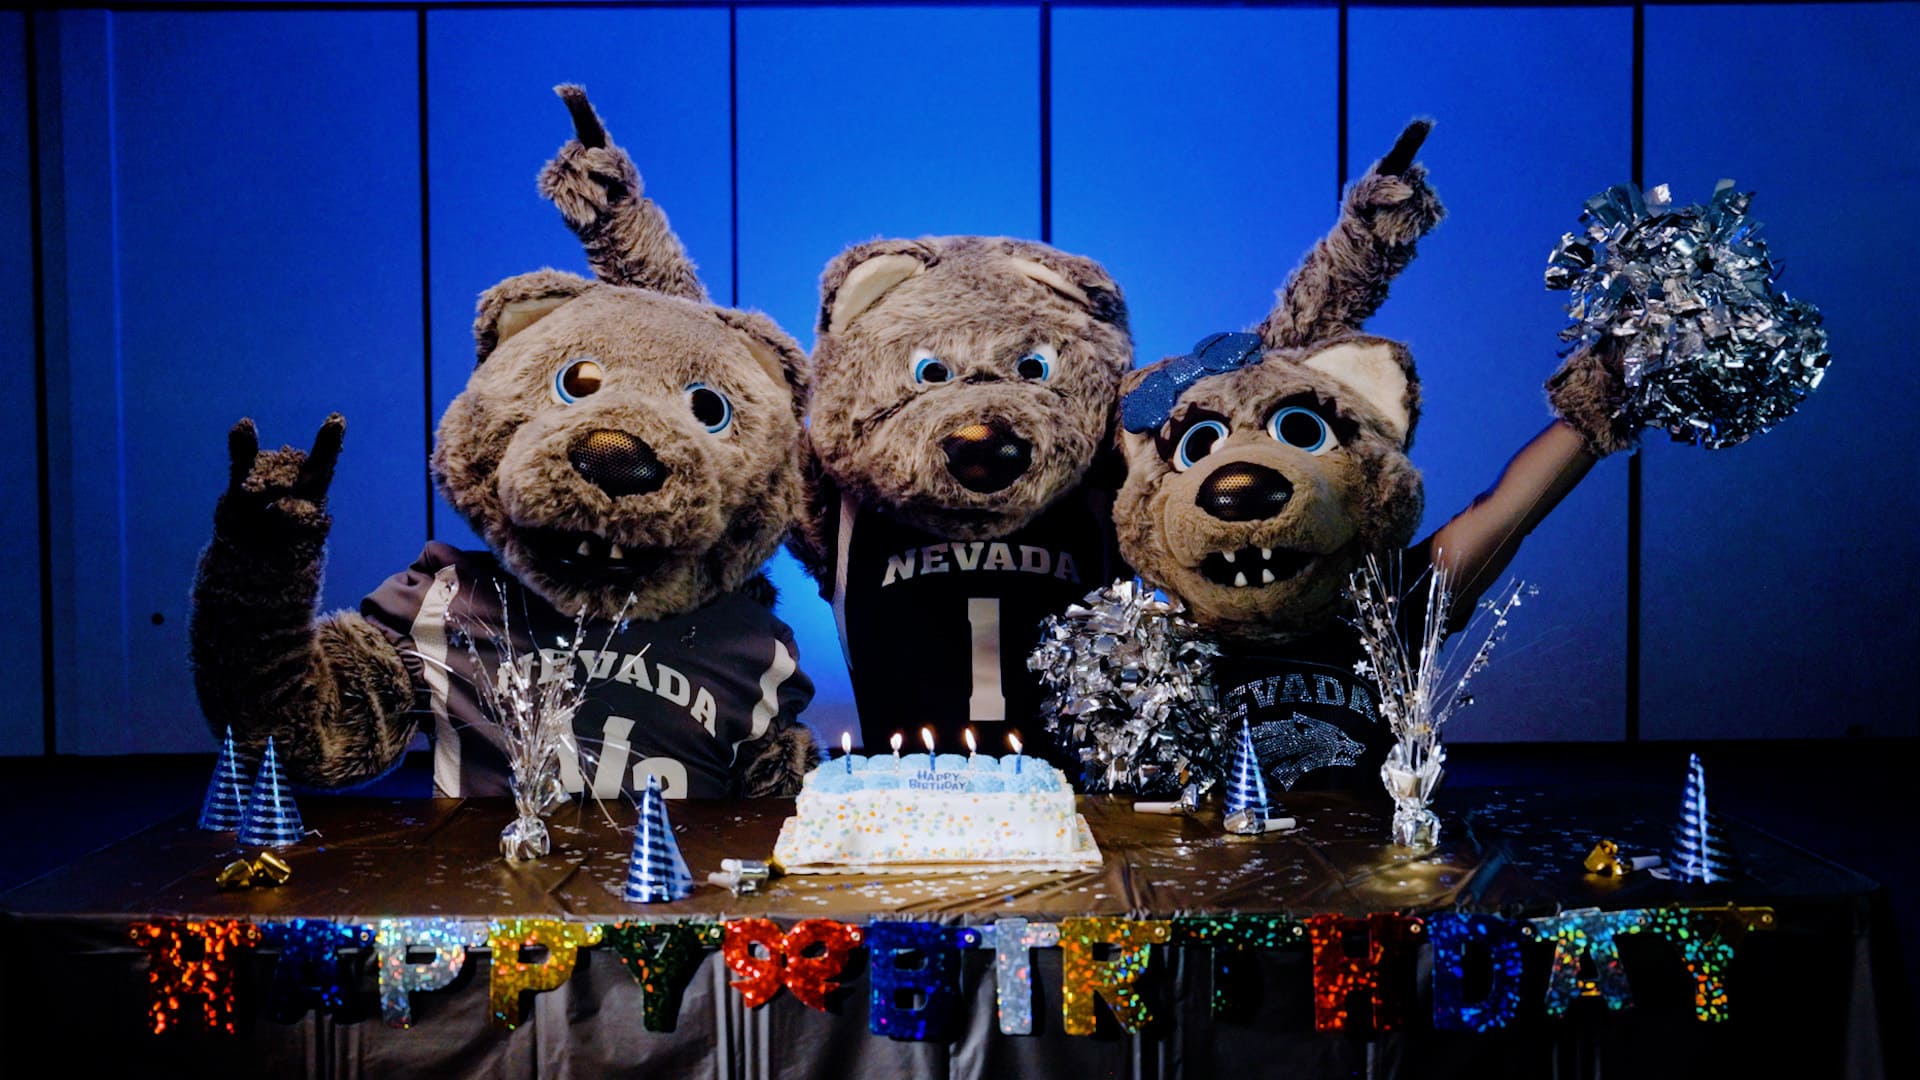 University mascots, Alphie, Luna, and Wolfie Jr., wear Nevada jerseys and celebrate around a birthday cake.